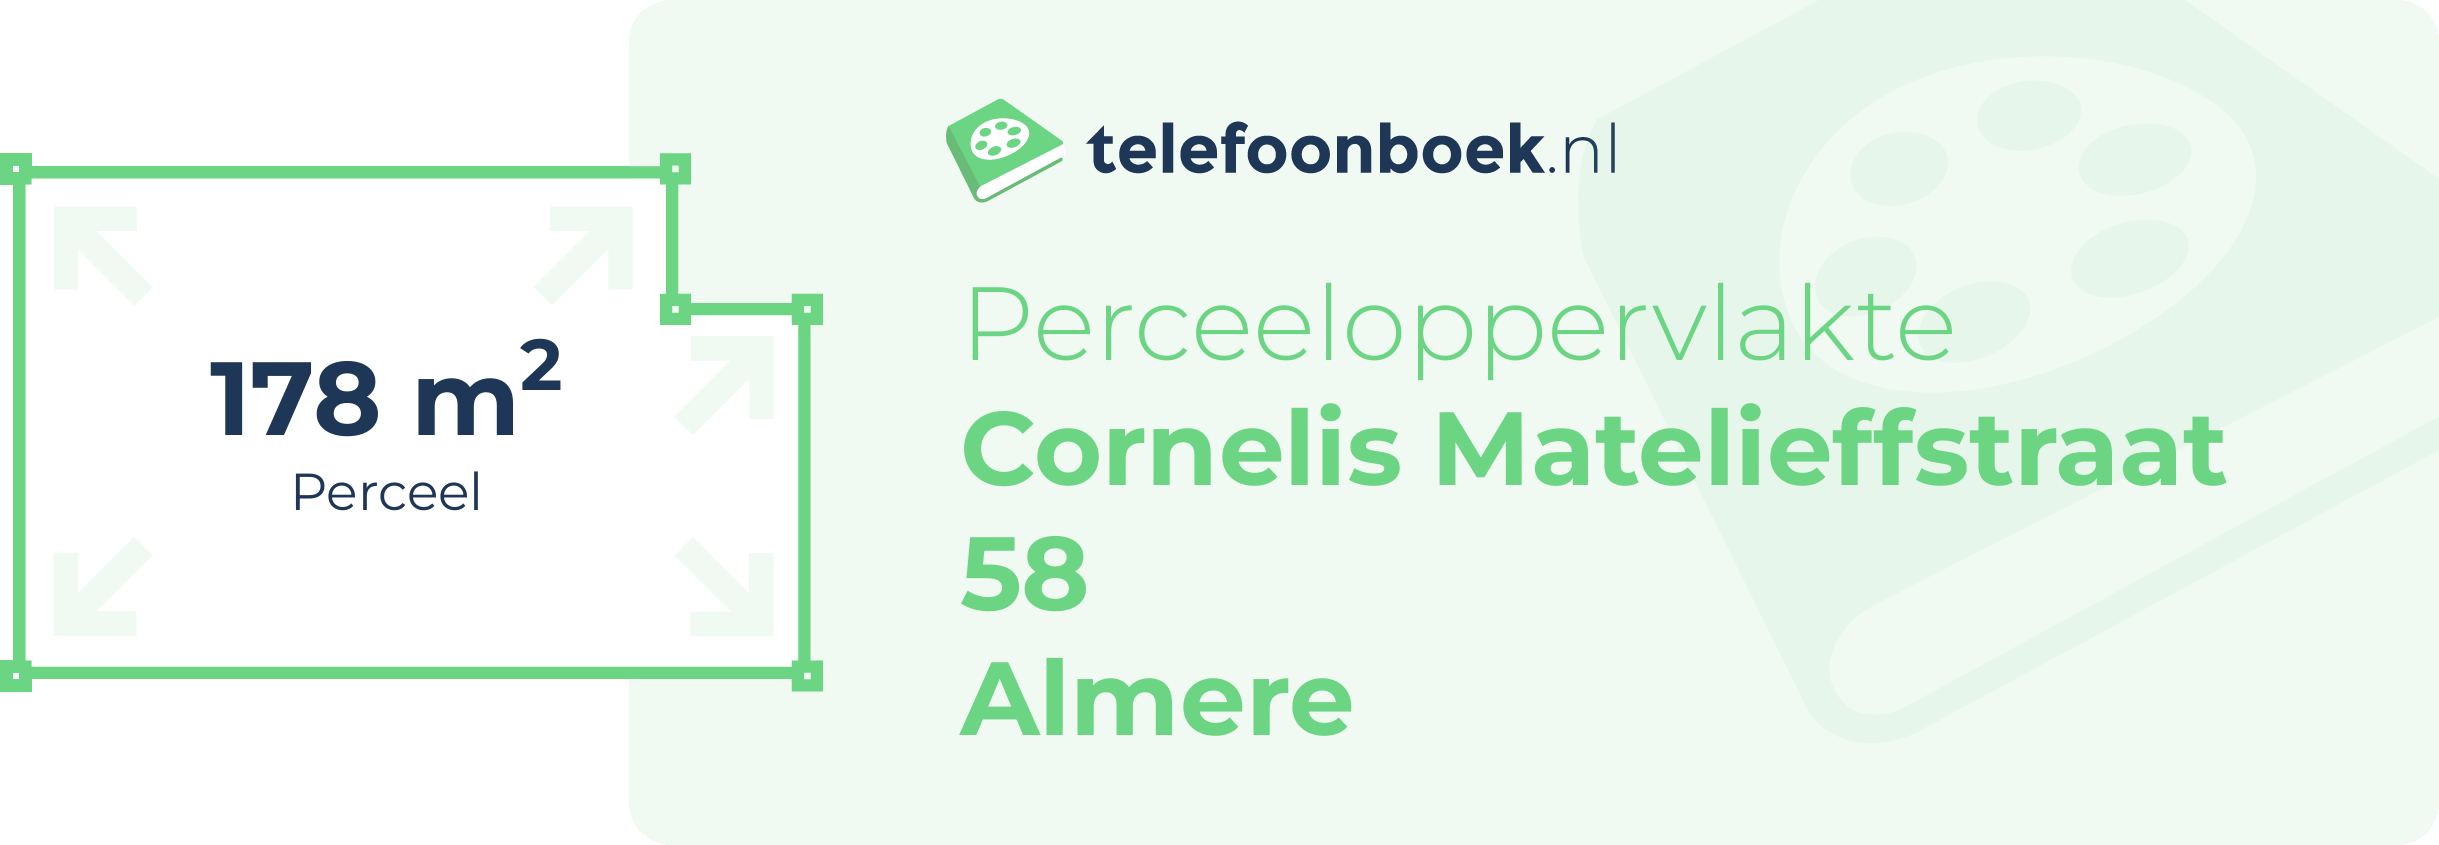 Perceeloppervlakte Cornelis Matelieffstraat 58 Almere